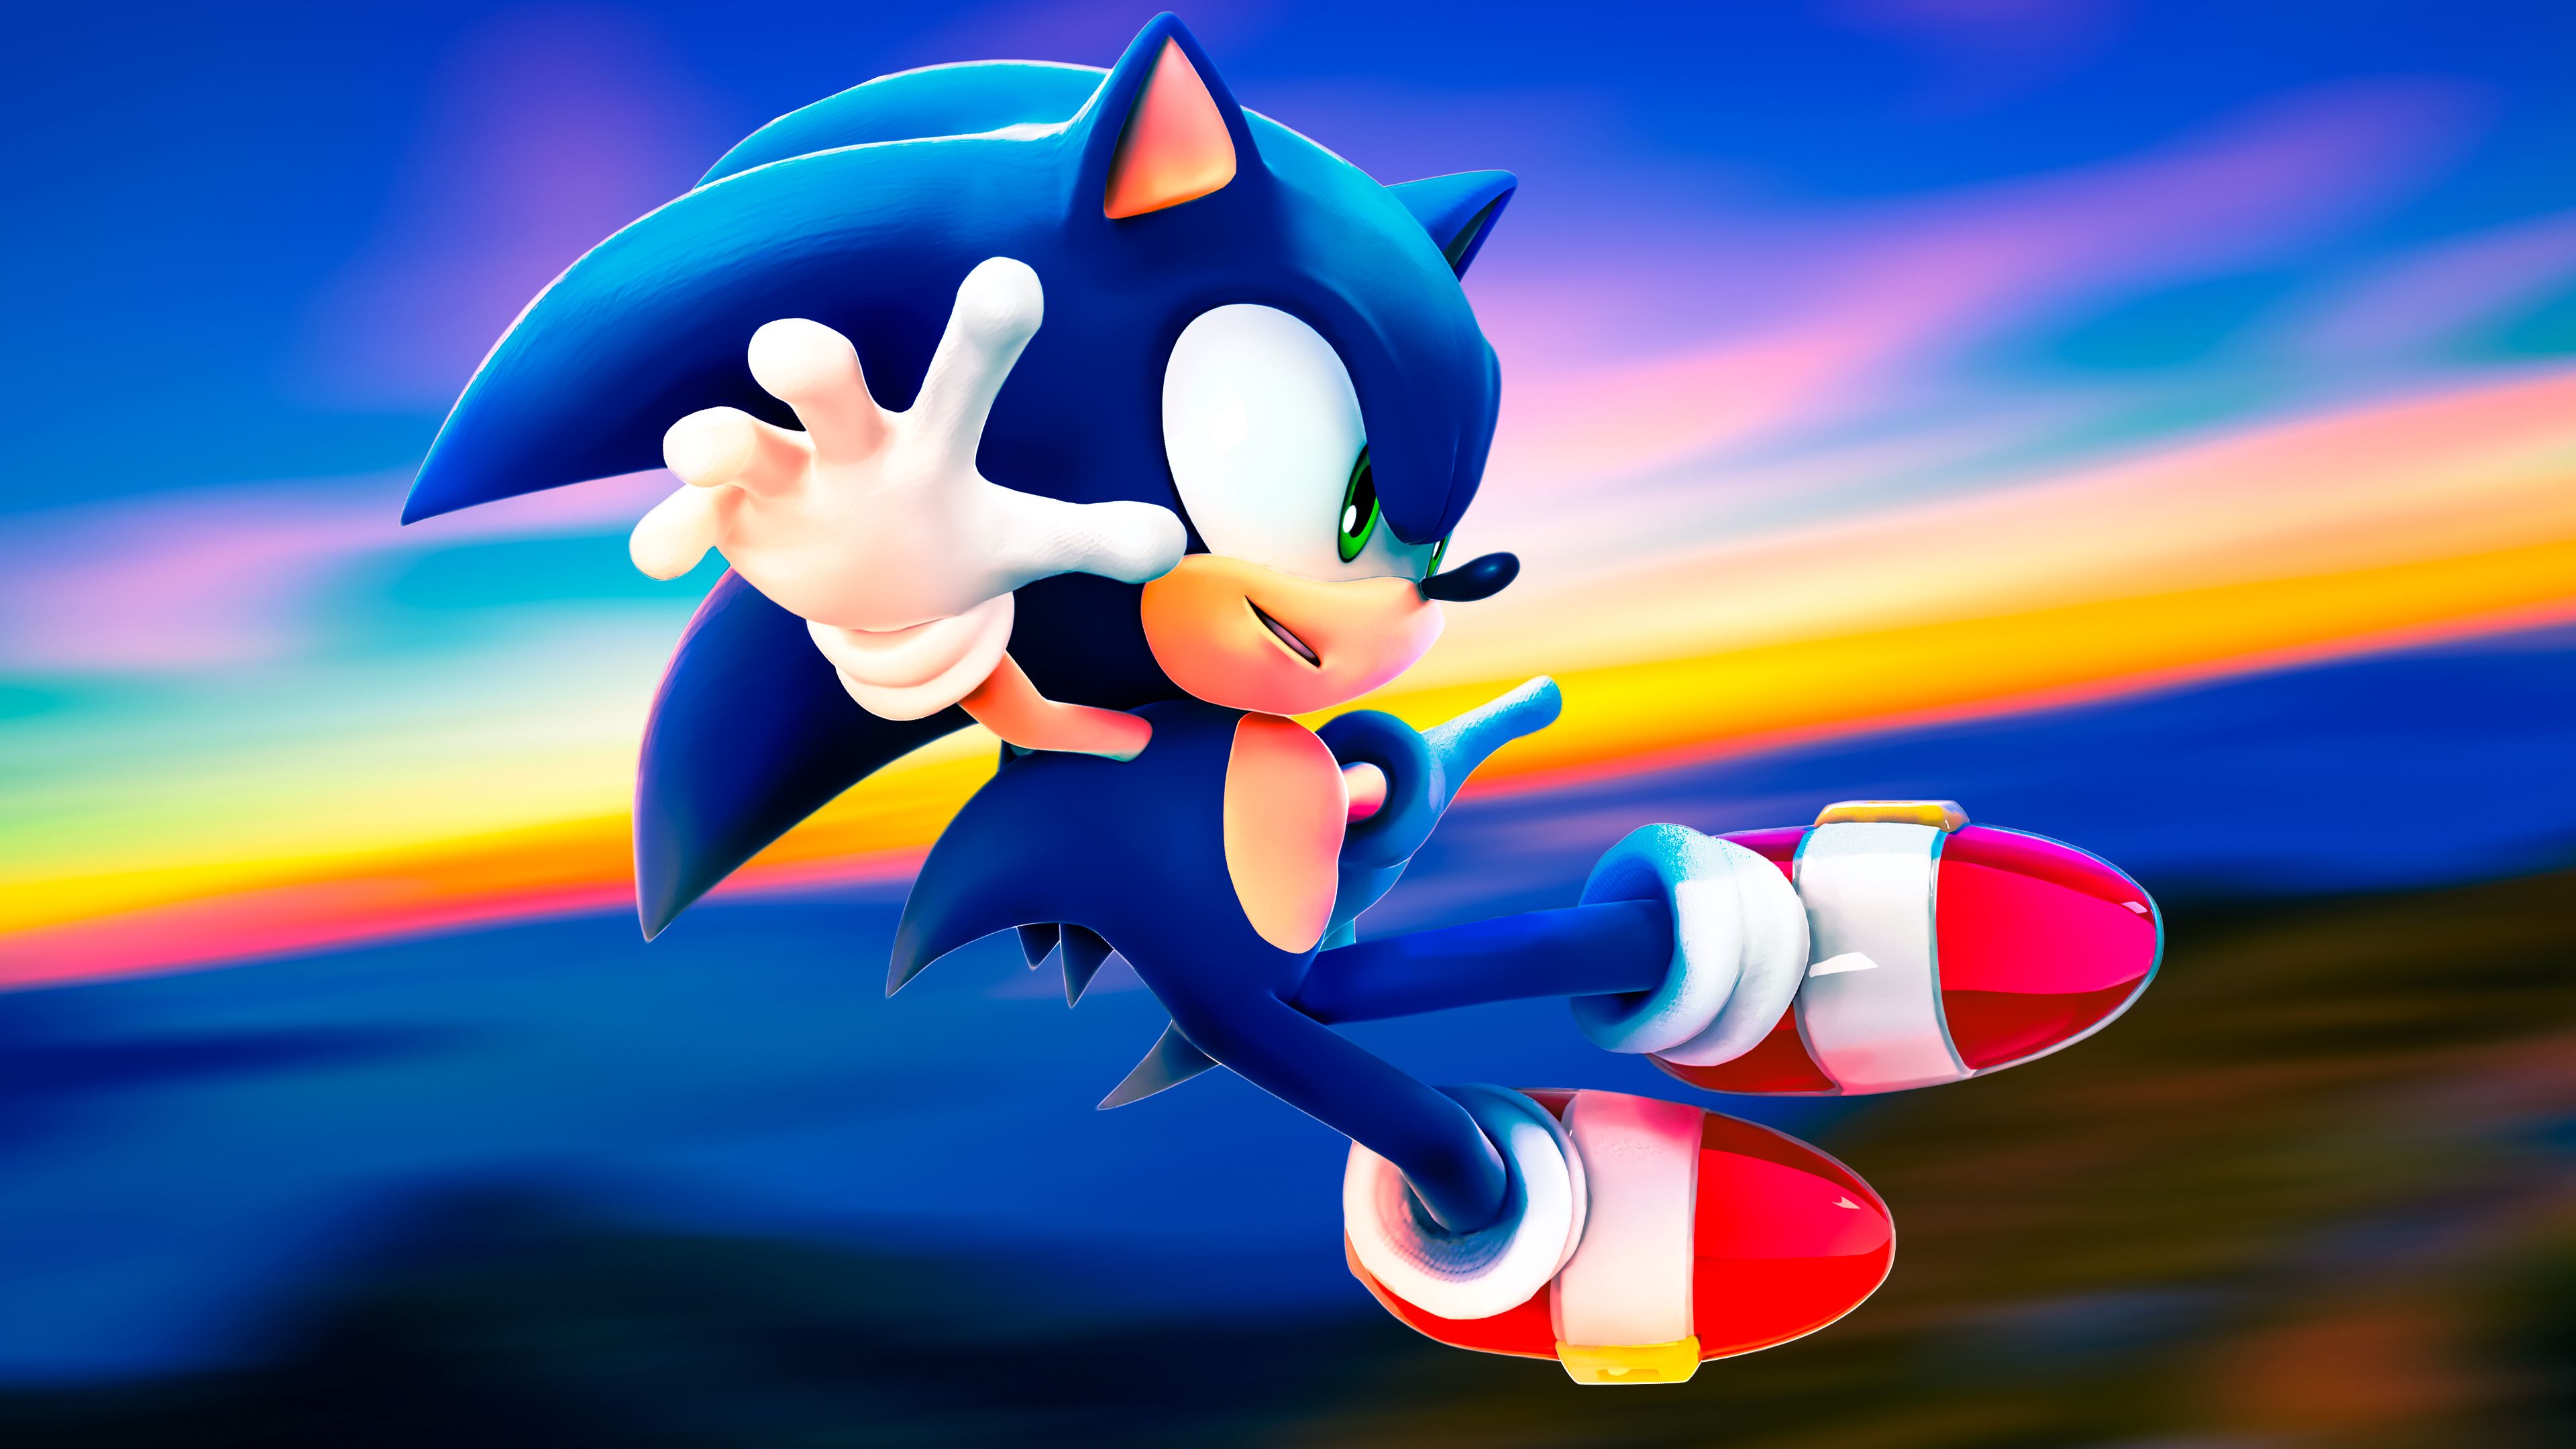 Sonic the Hedgehog wallpaper - Sonic